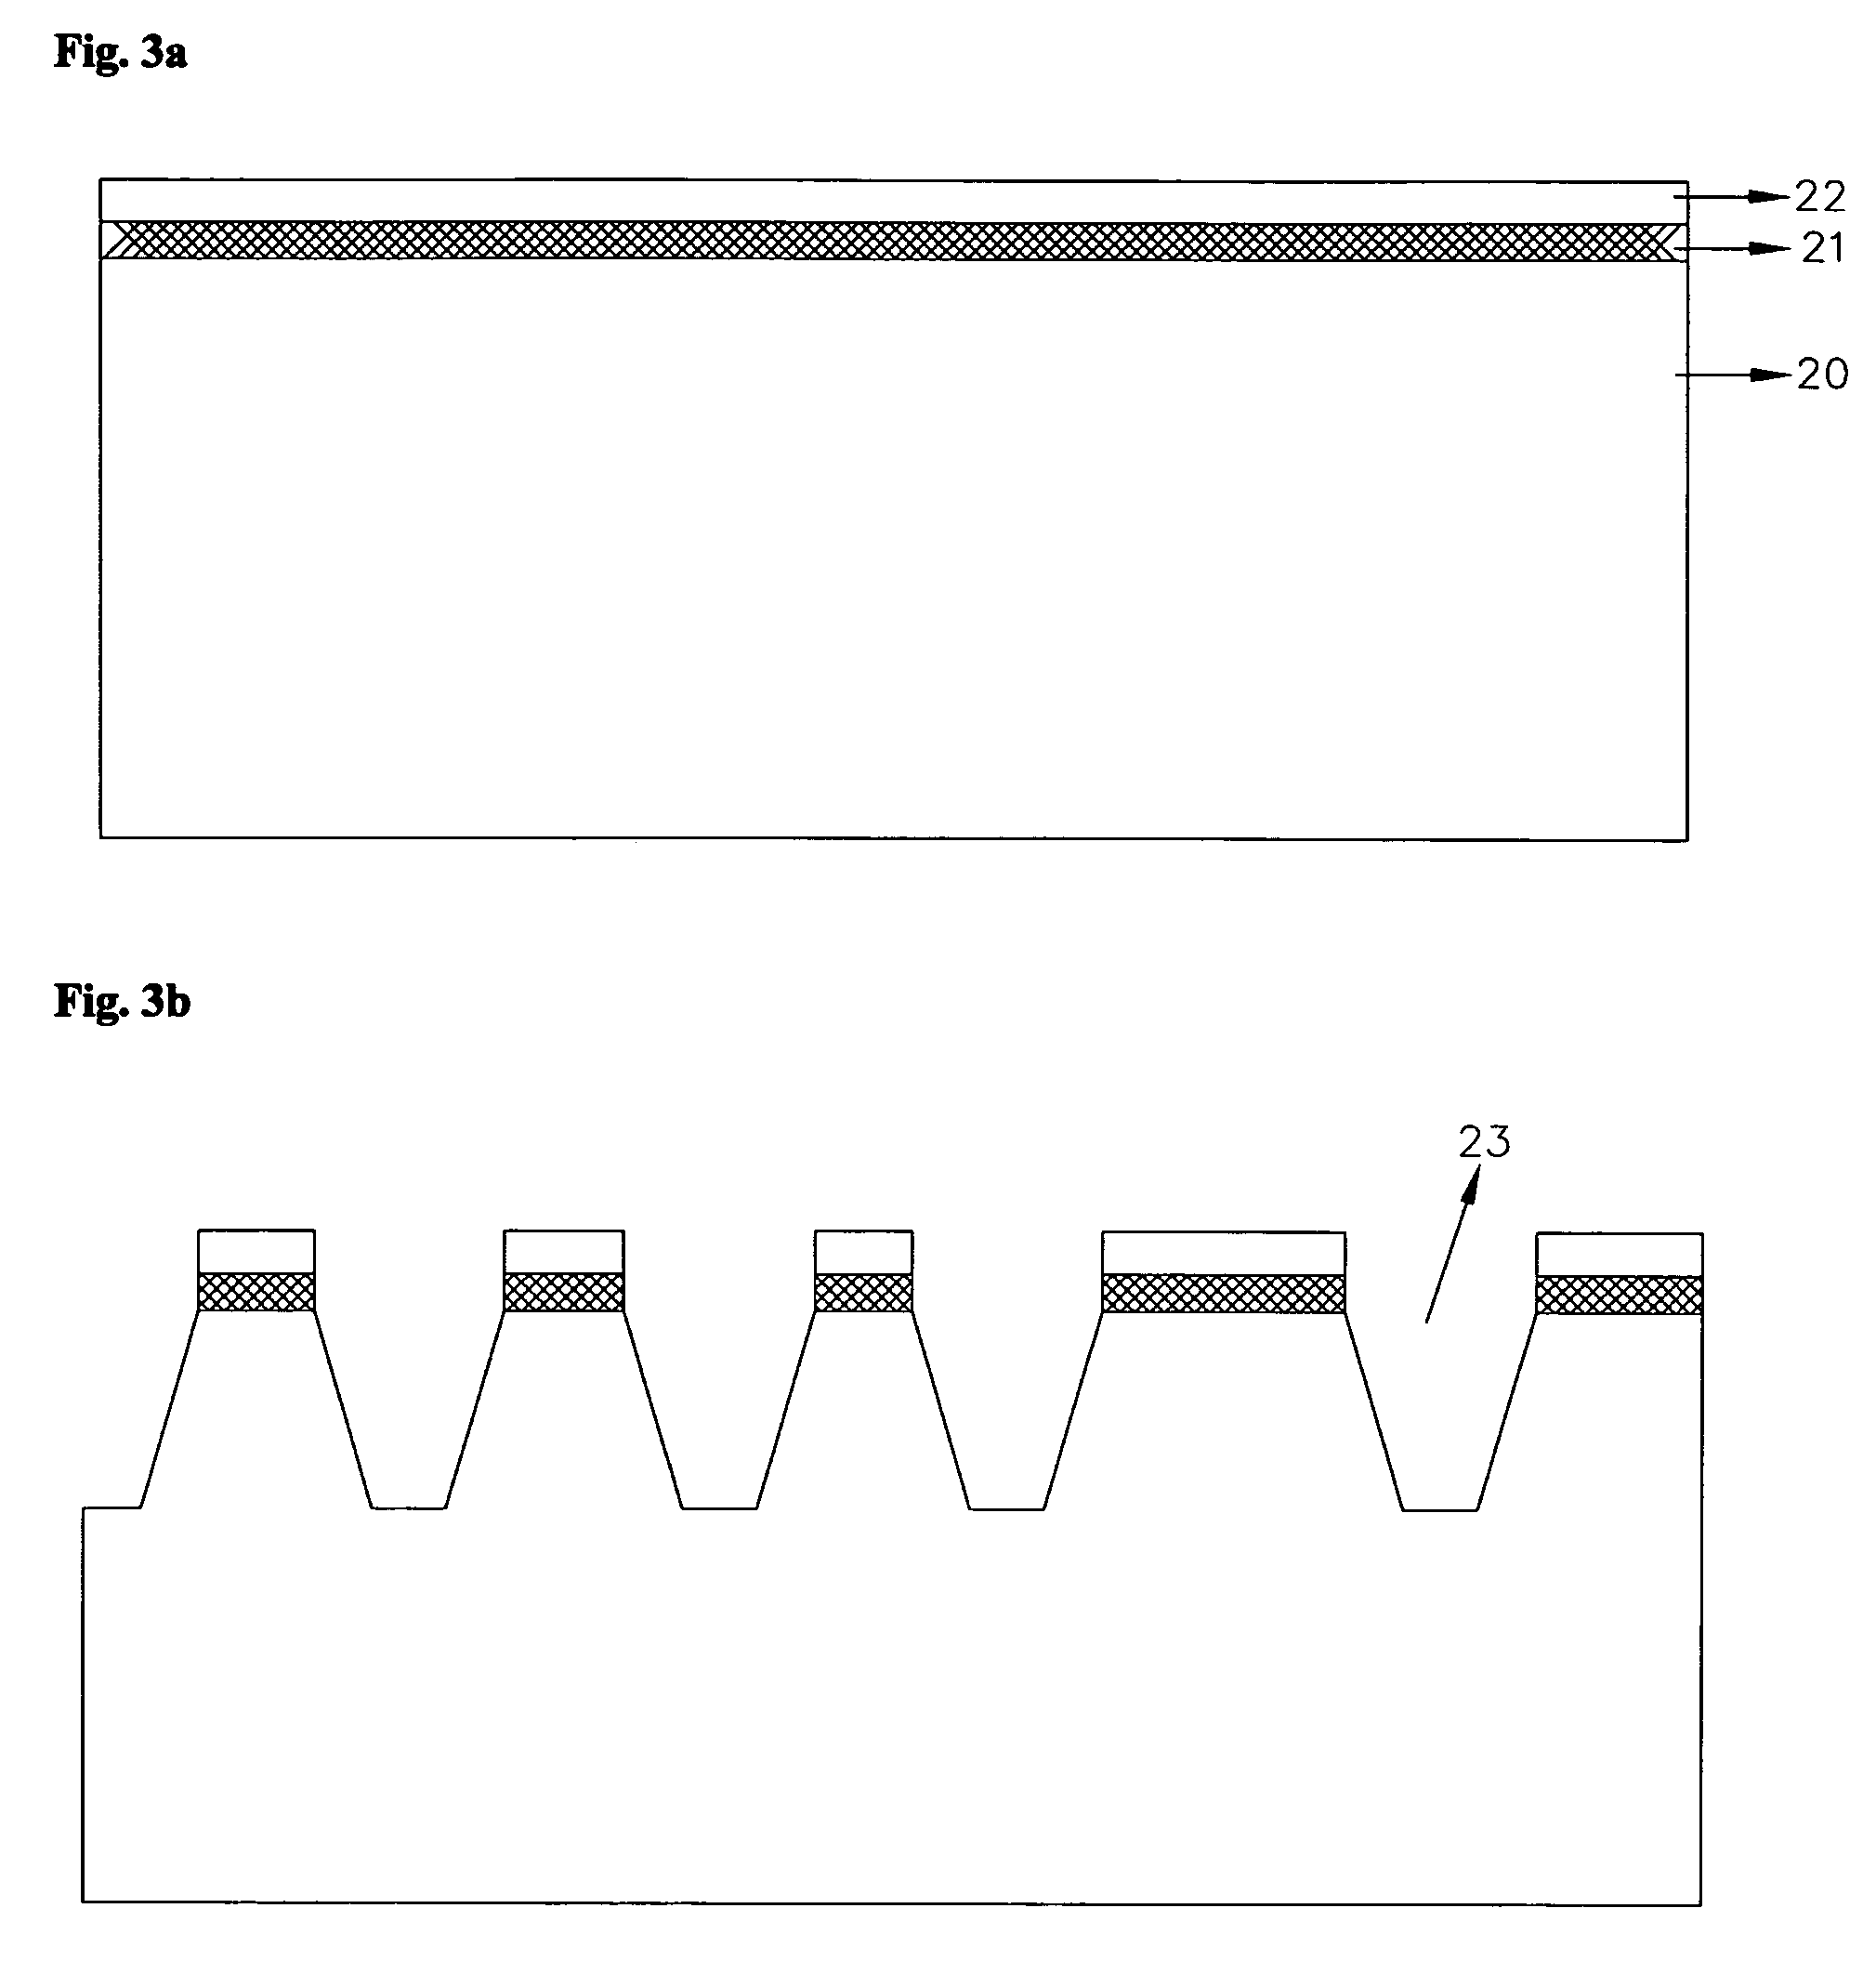 Methods of fabricating bipolar transistor